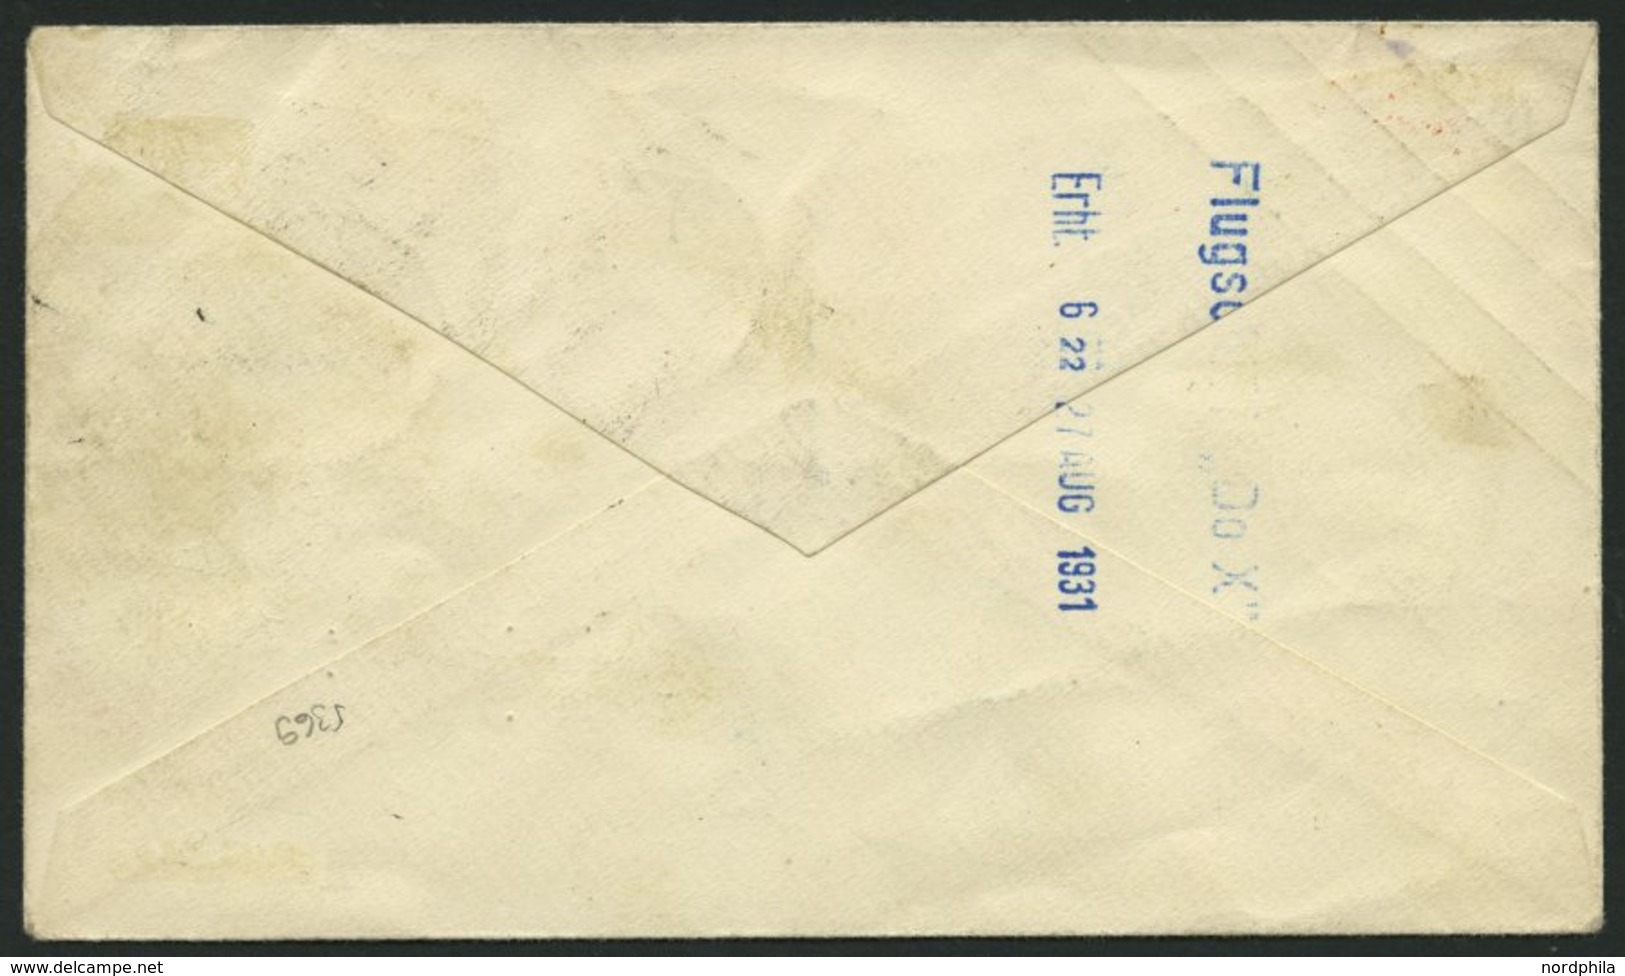 DO-X LUFTPOST DO X2.001.CH BRIEF, 31.08.1931, DO X 2, Postabgabe Trimmis, Blauer Zweikreiser VOLO DI COLLAUDO, Prachtbri - Covers & Documents